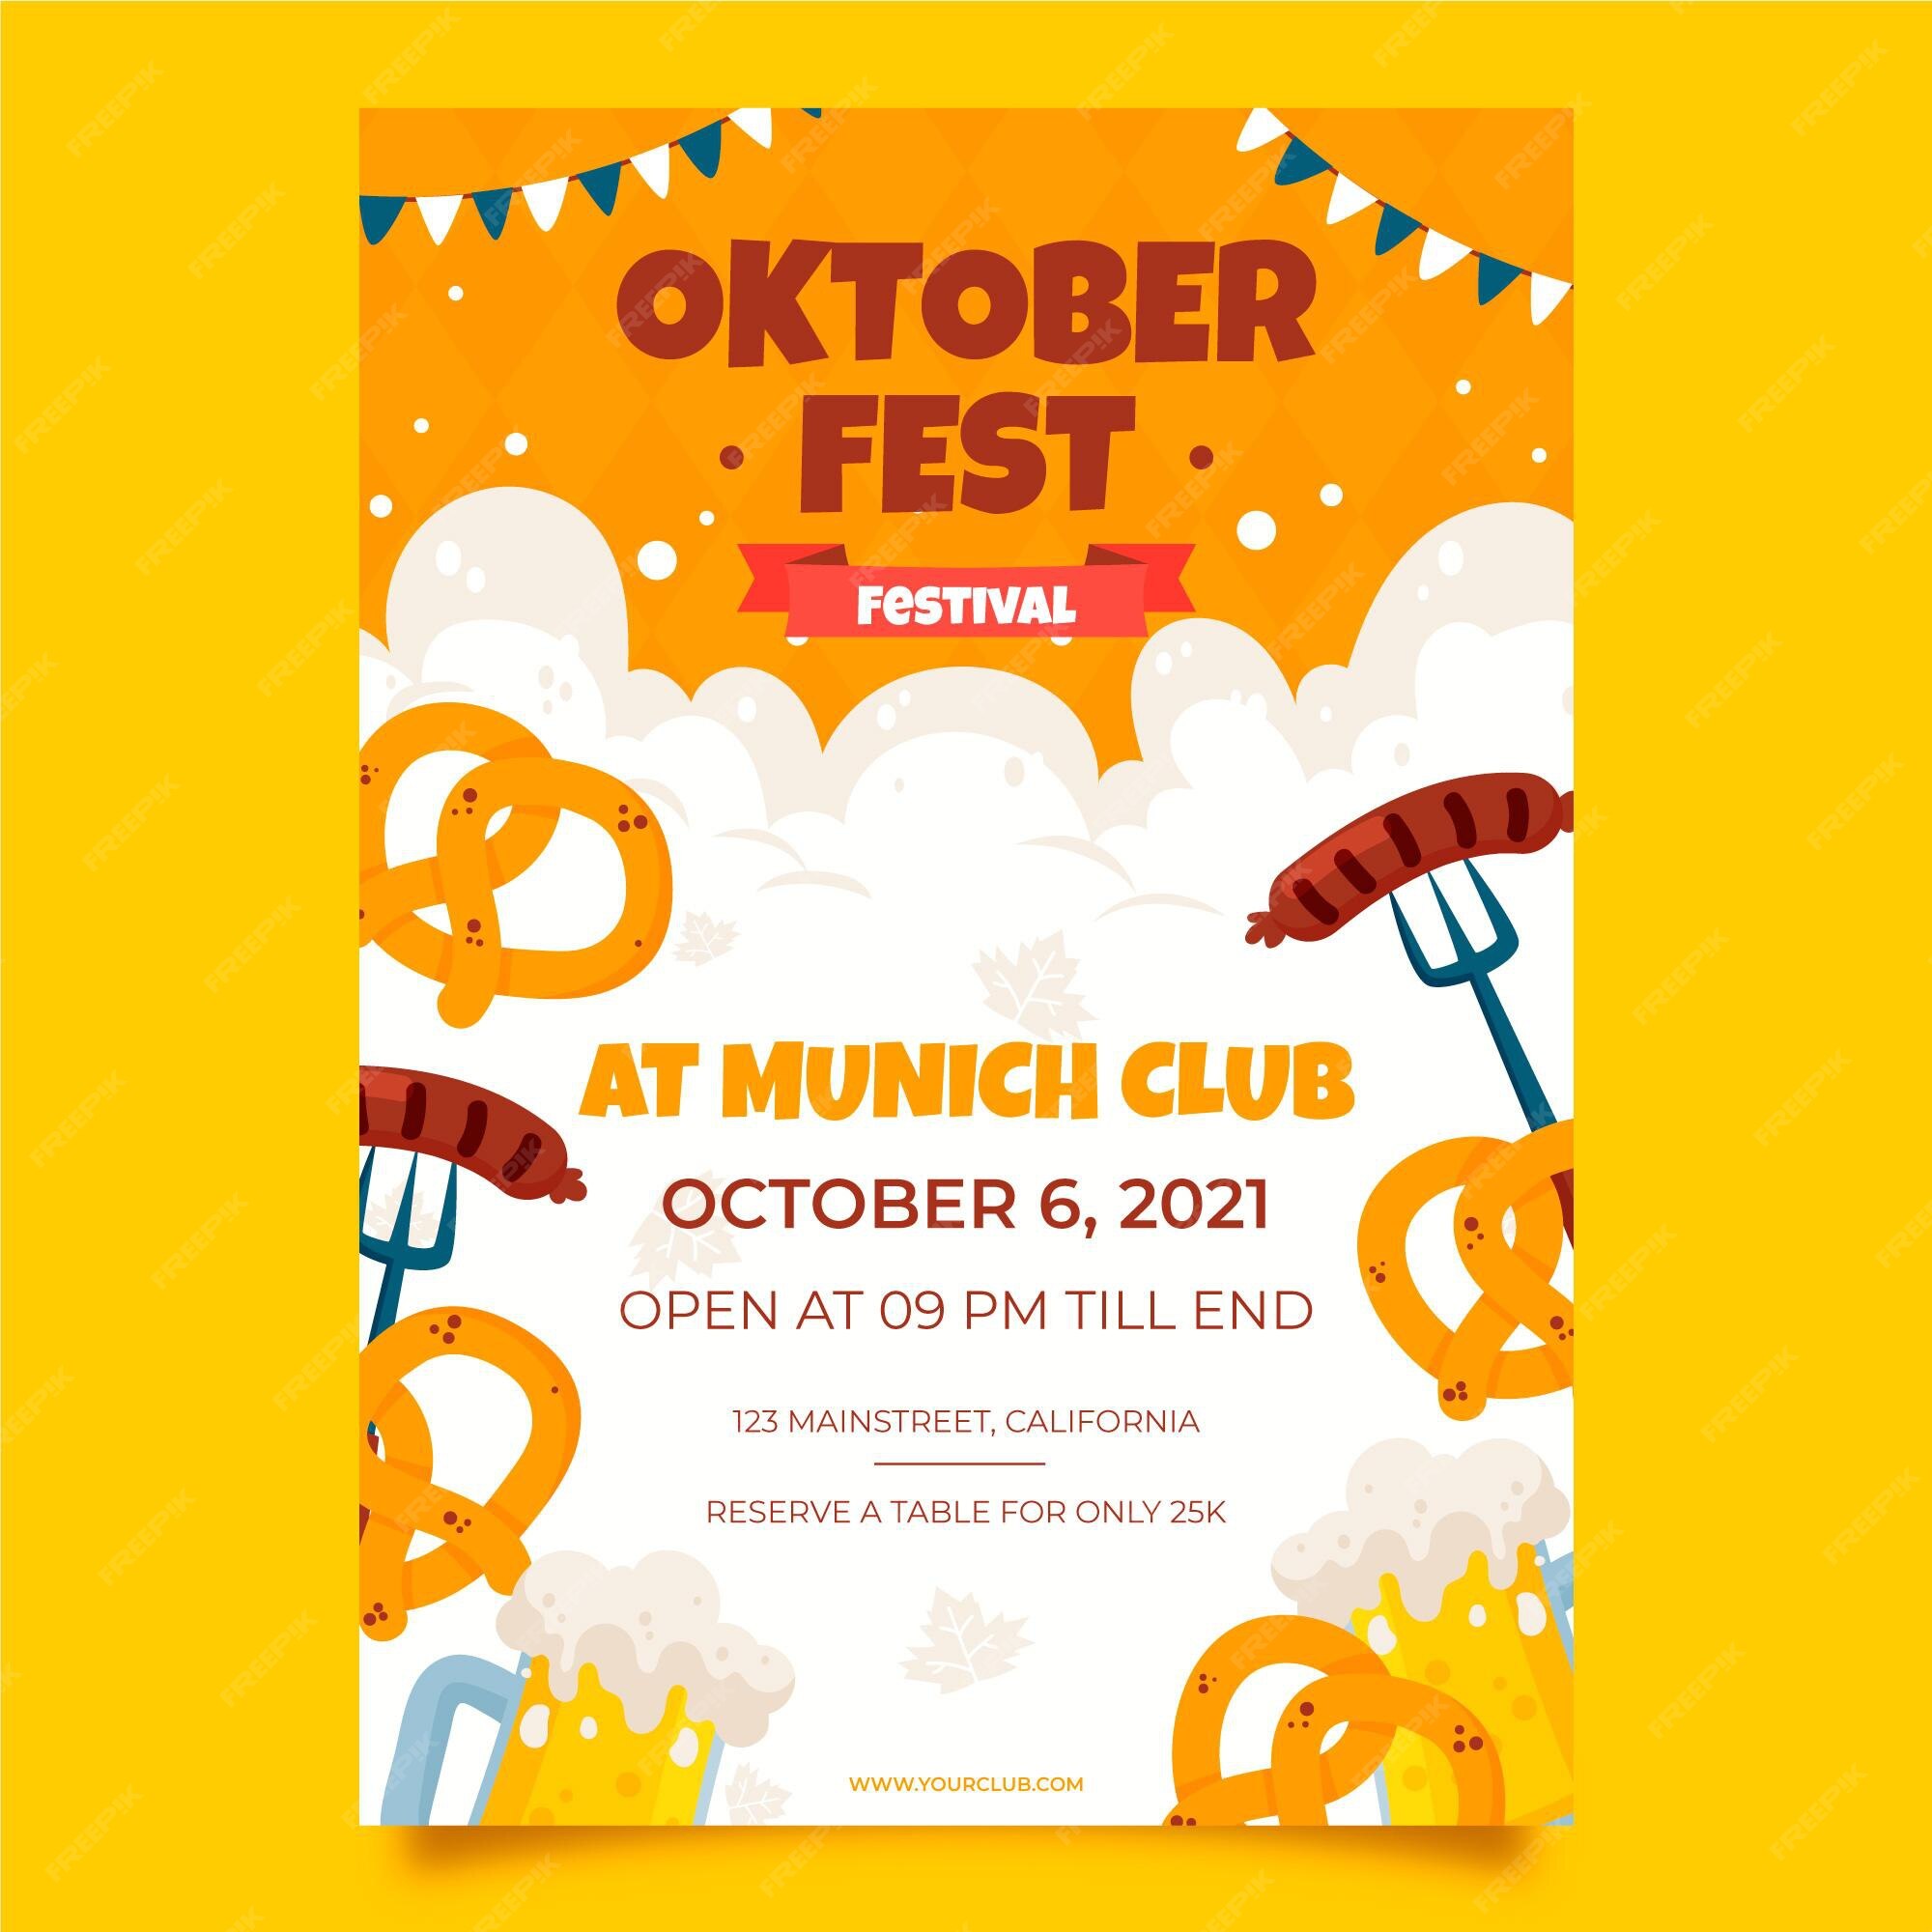 Free Vector | Hand drawn oktoberfest event poster